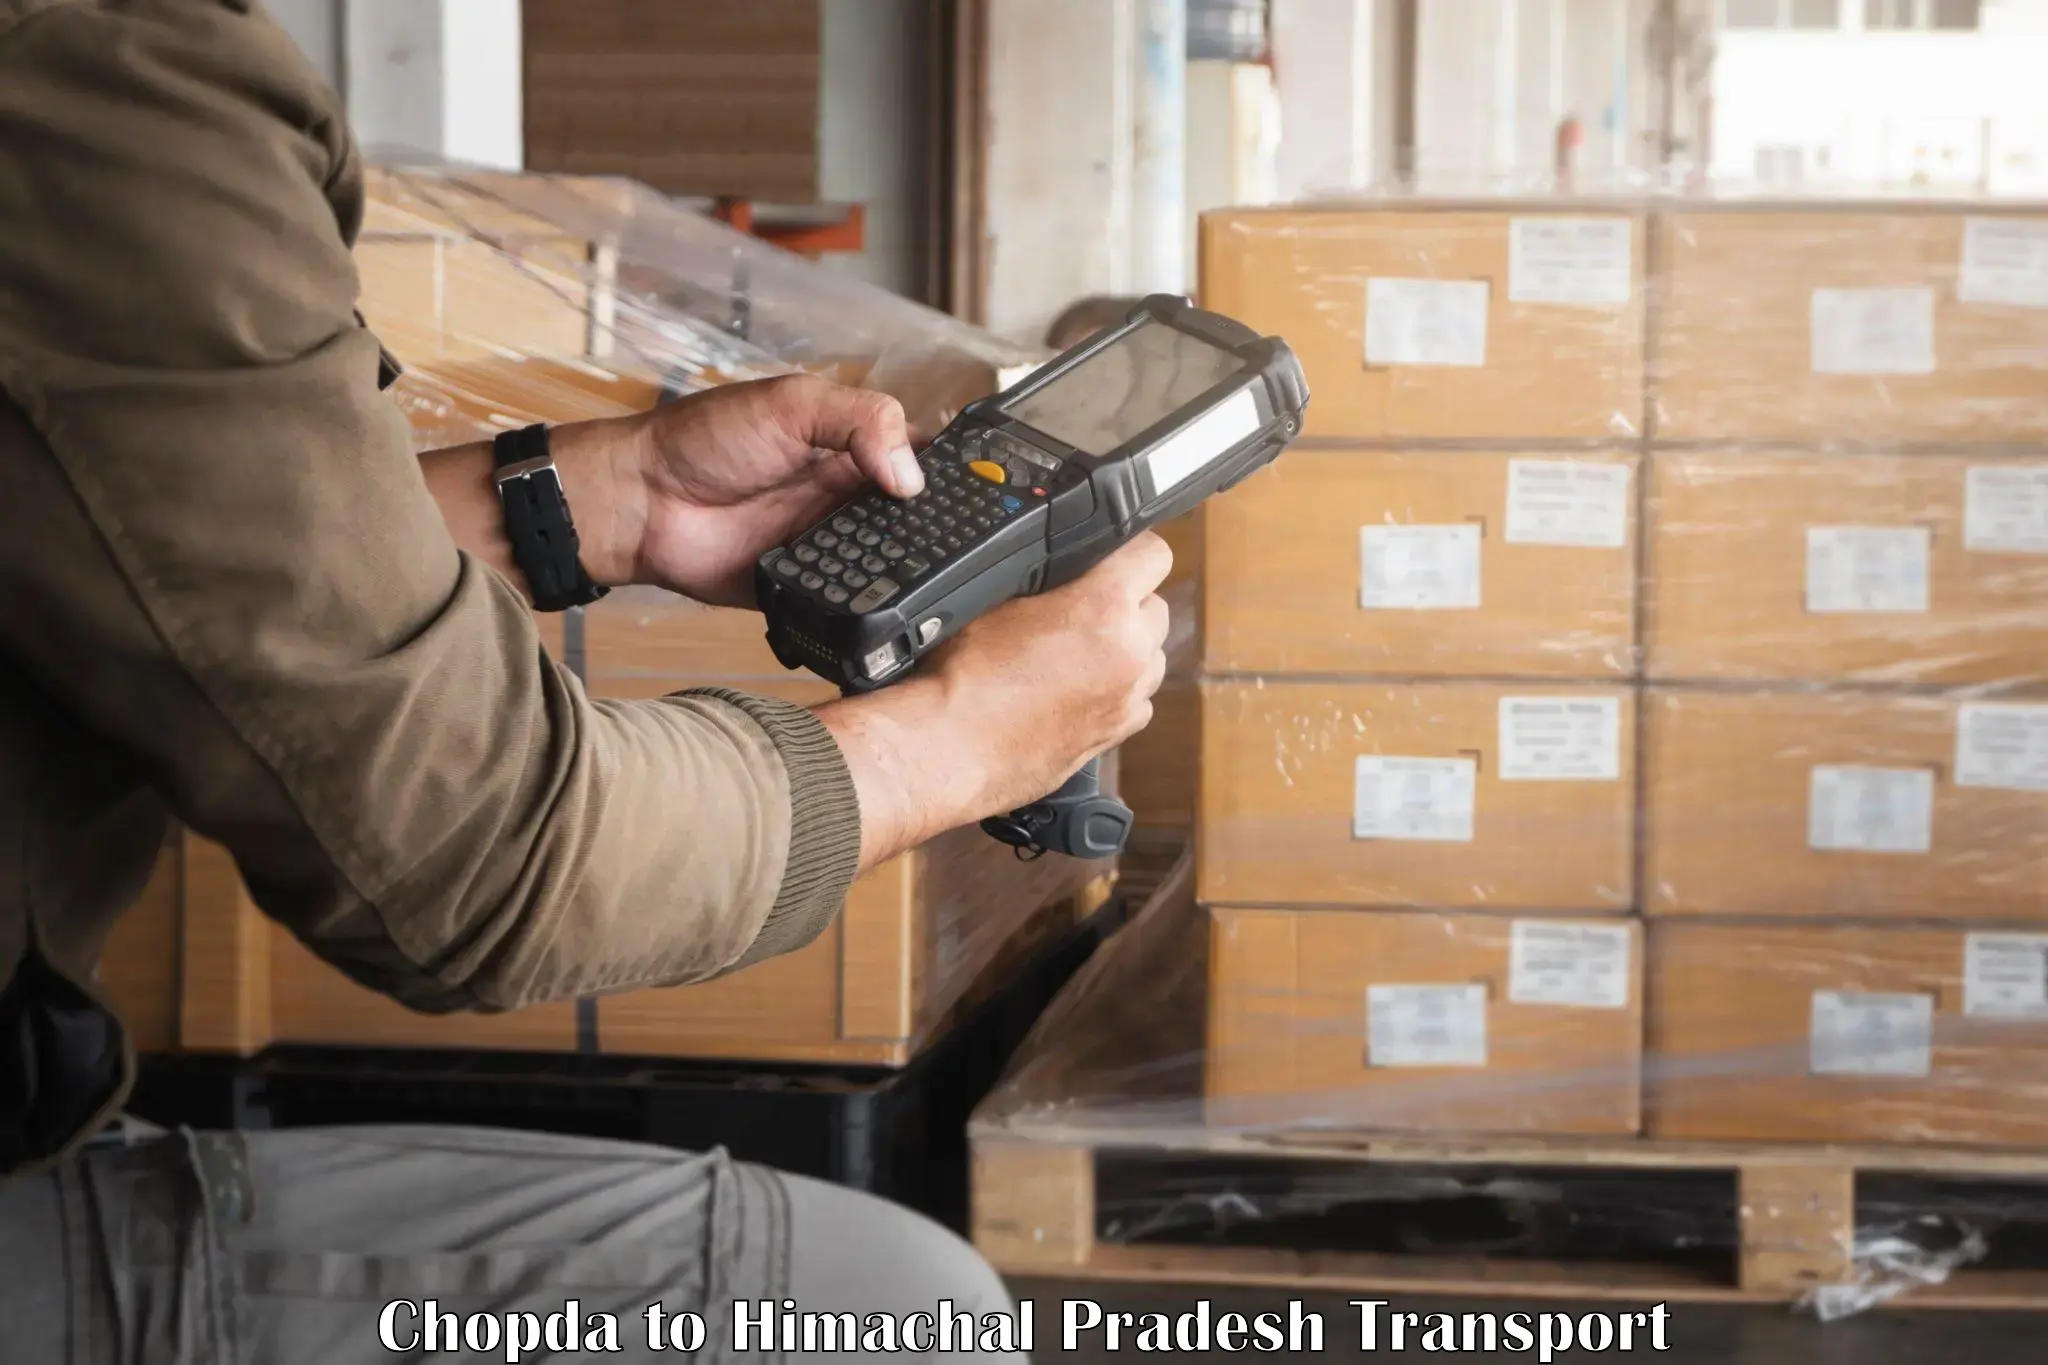 Goods delivery service Chopda to Himachal Pradesh